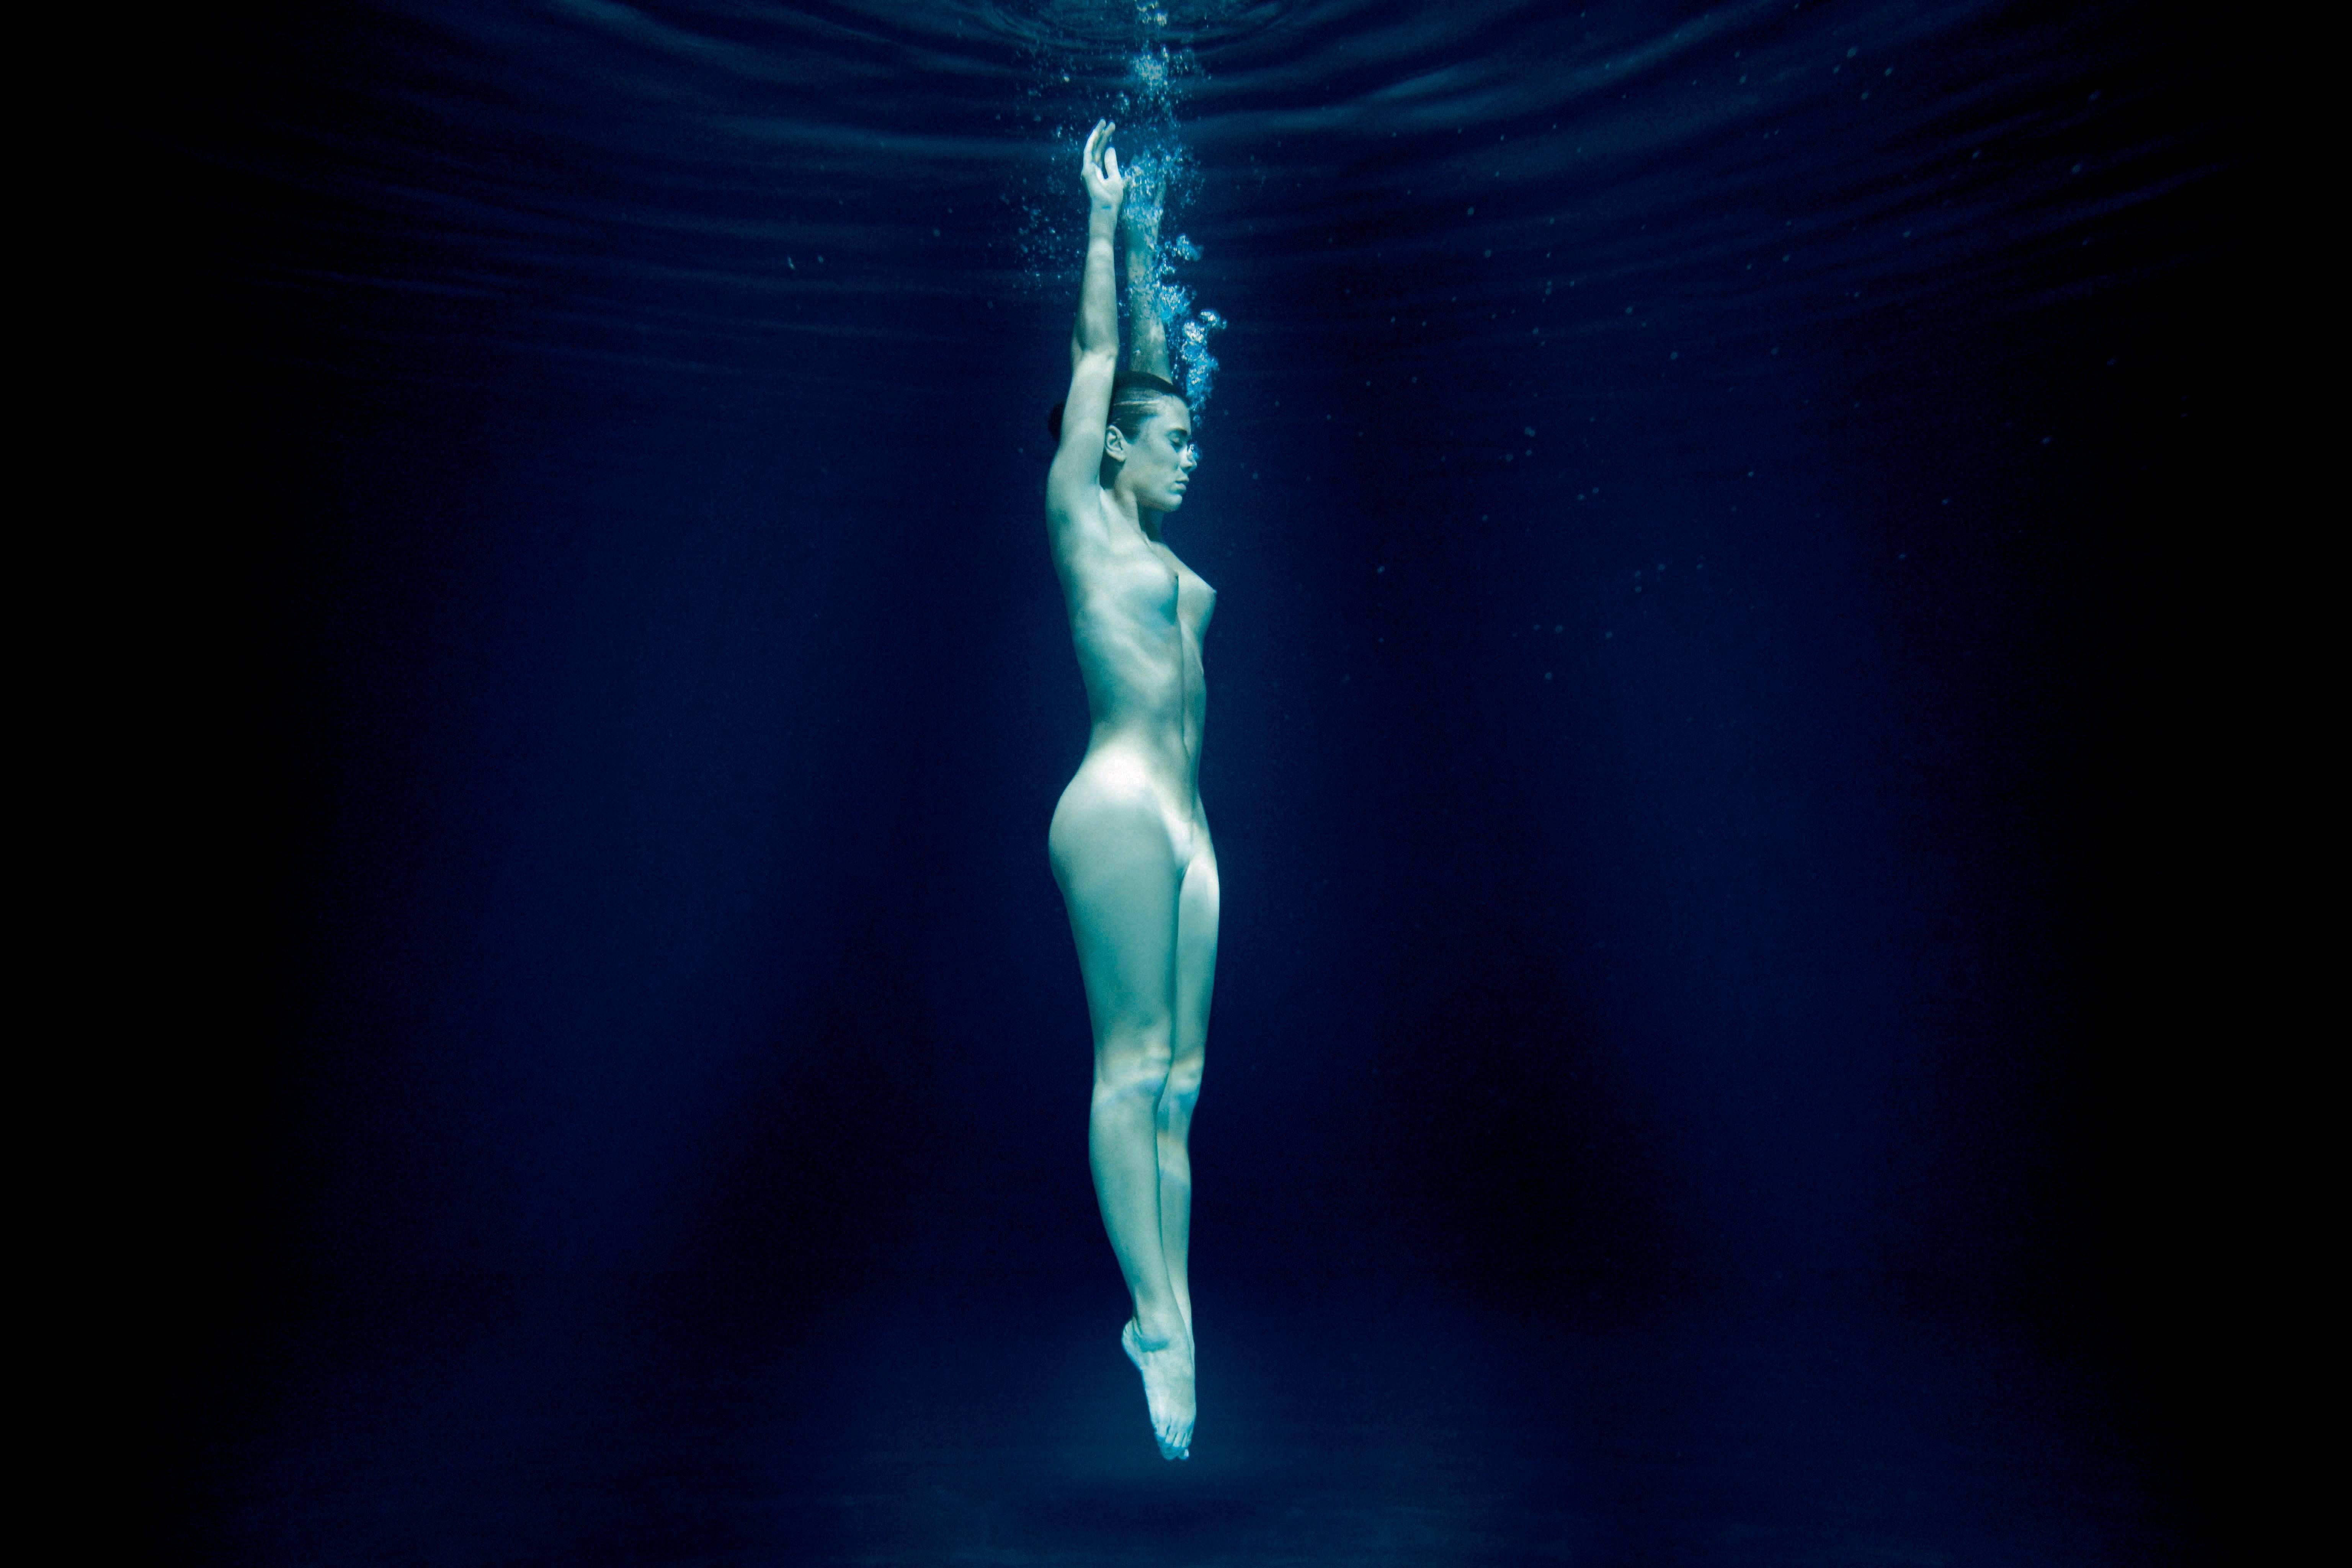 Mauricio Velez Color Photograph - Half Angels Half Demons #4, Underwater nude color photograph 